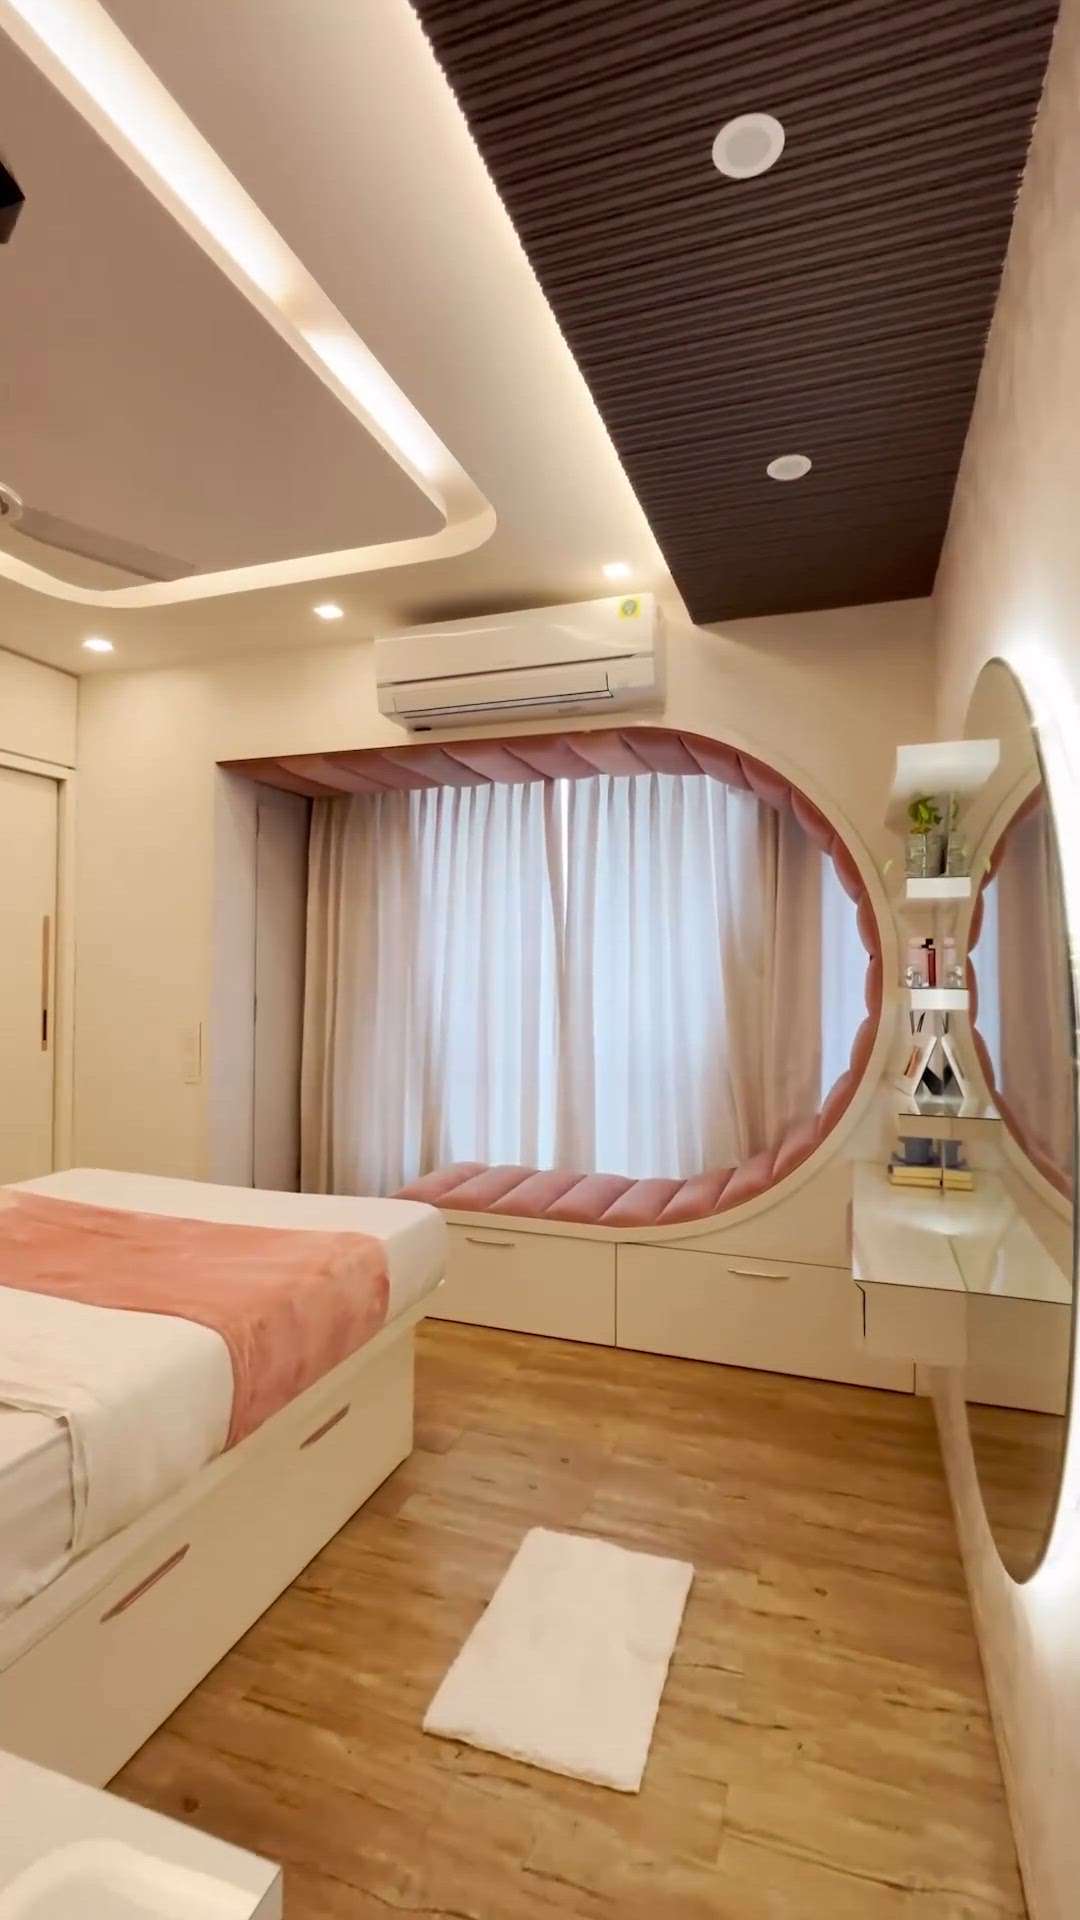 #InteriorDesigner #BedroomDecor #MasterBedroom #ModularKitchen #Modularfurniture #modularwardrobe #Sofas #Beds